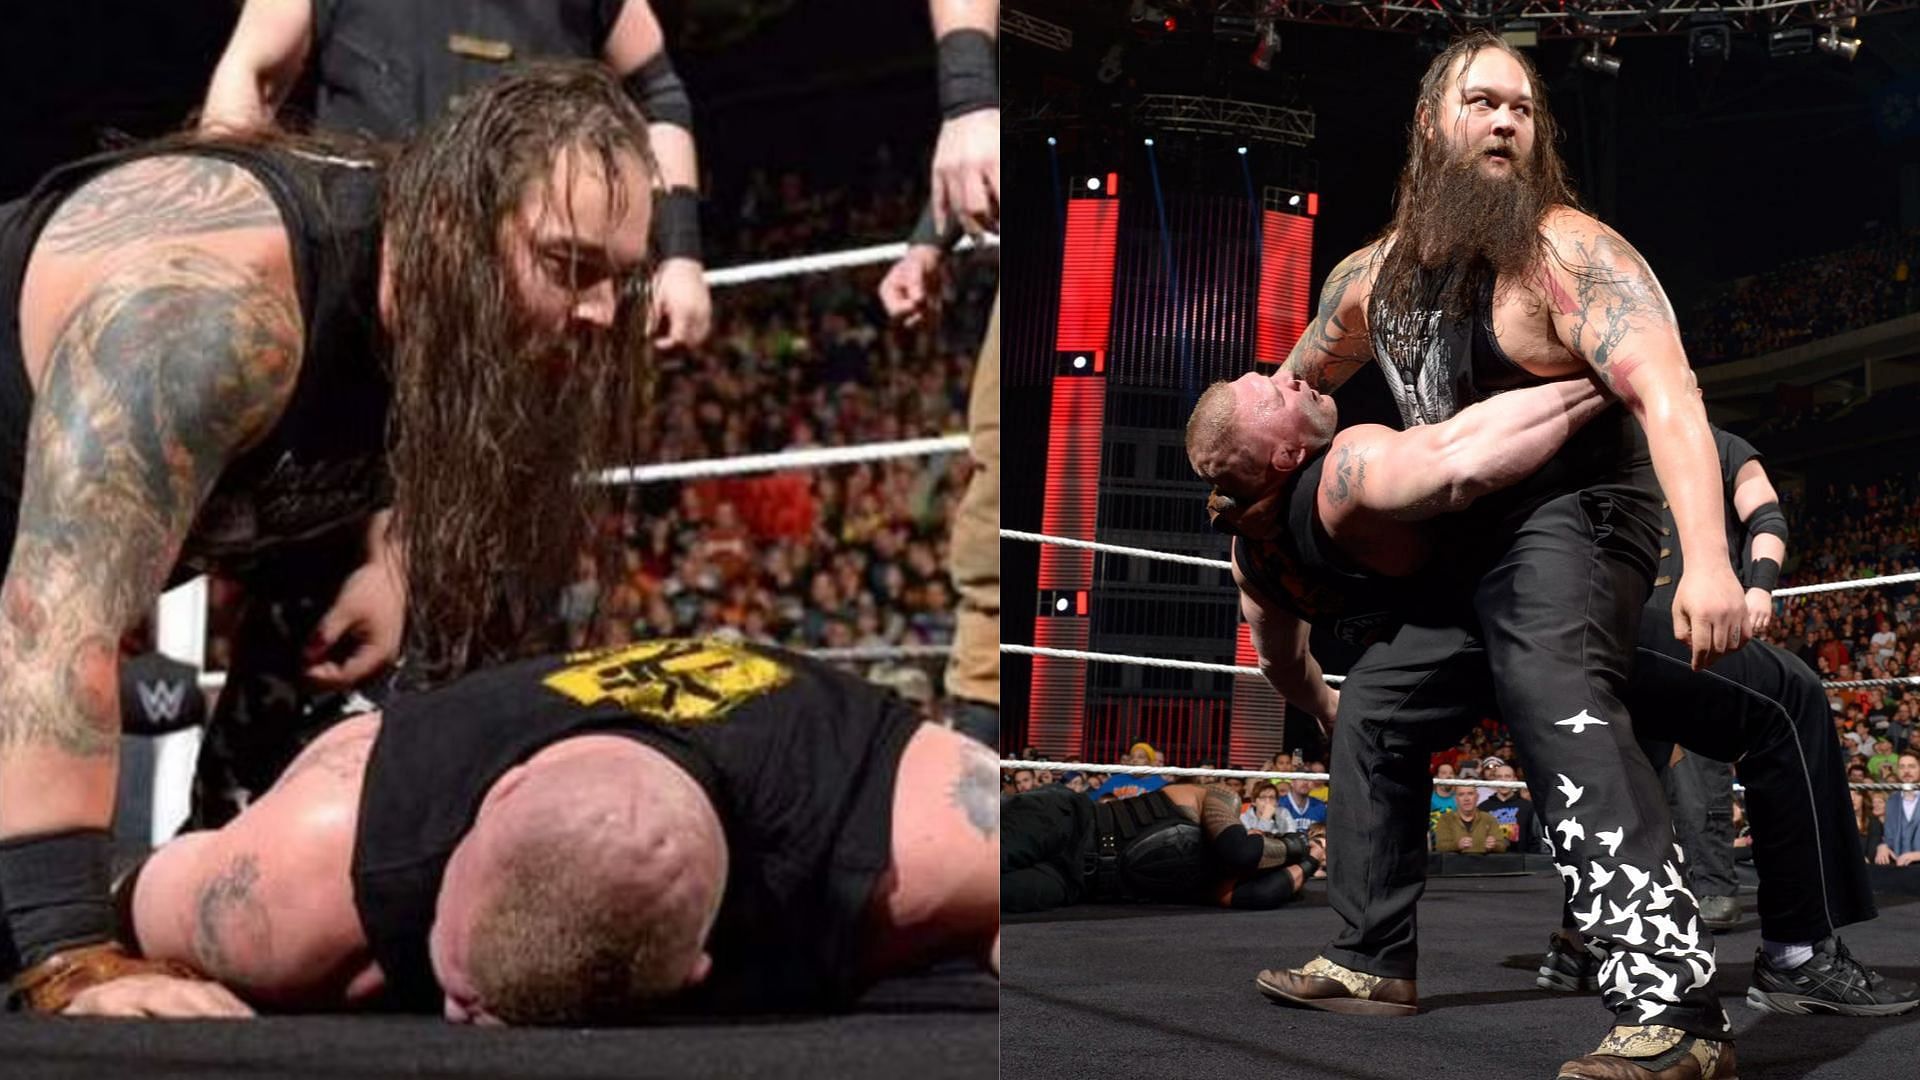 WWE Superstars Brock Lesnar and Bray Wyatt